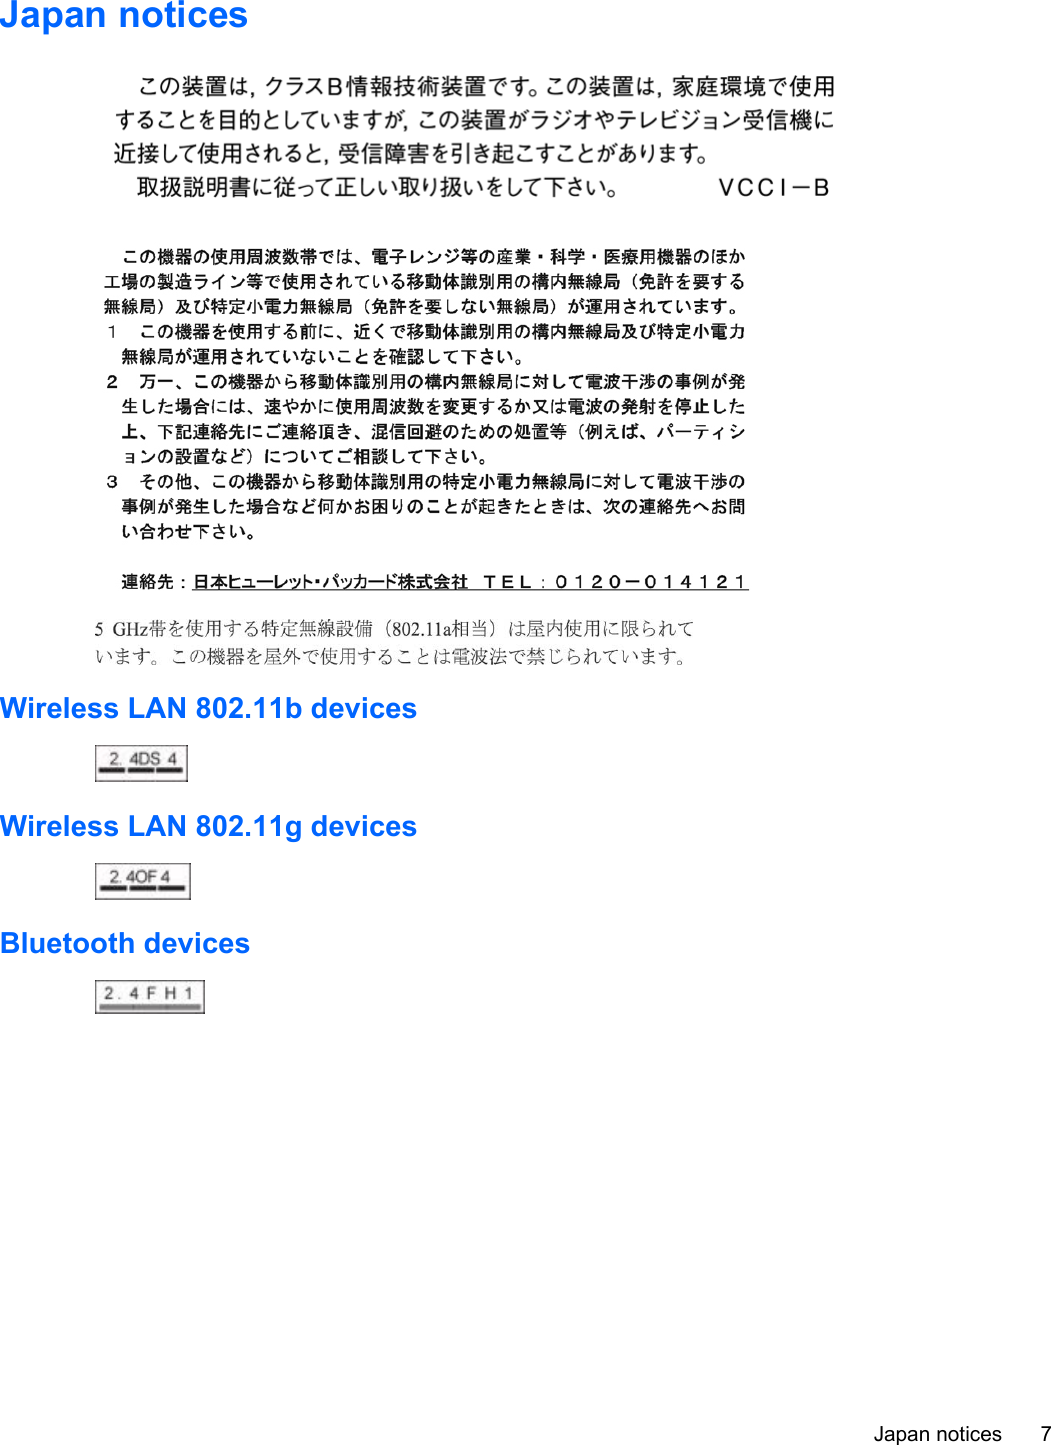 Japan noticesWireless LAN 802.11b devicesWireless LAN 802.11g devicesBluetooth devicesJapan notices 7